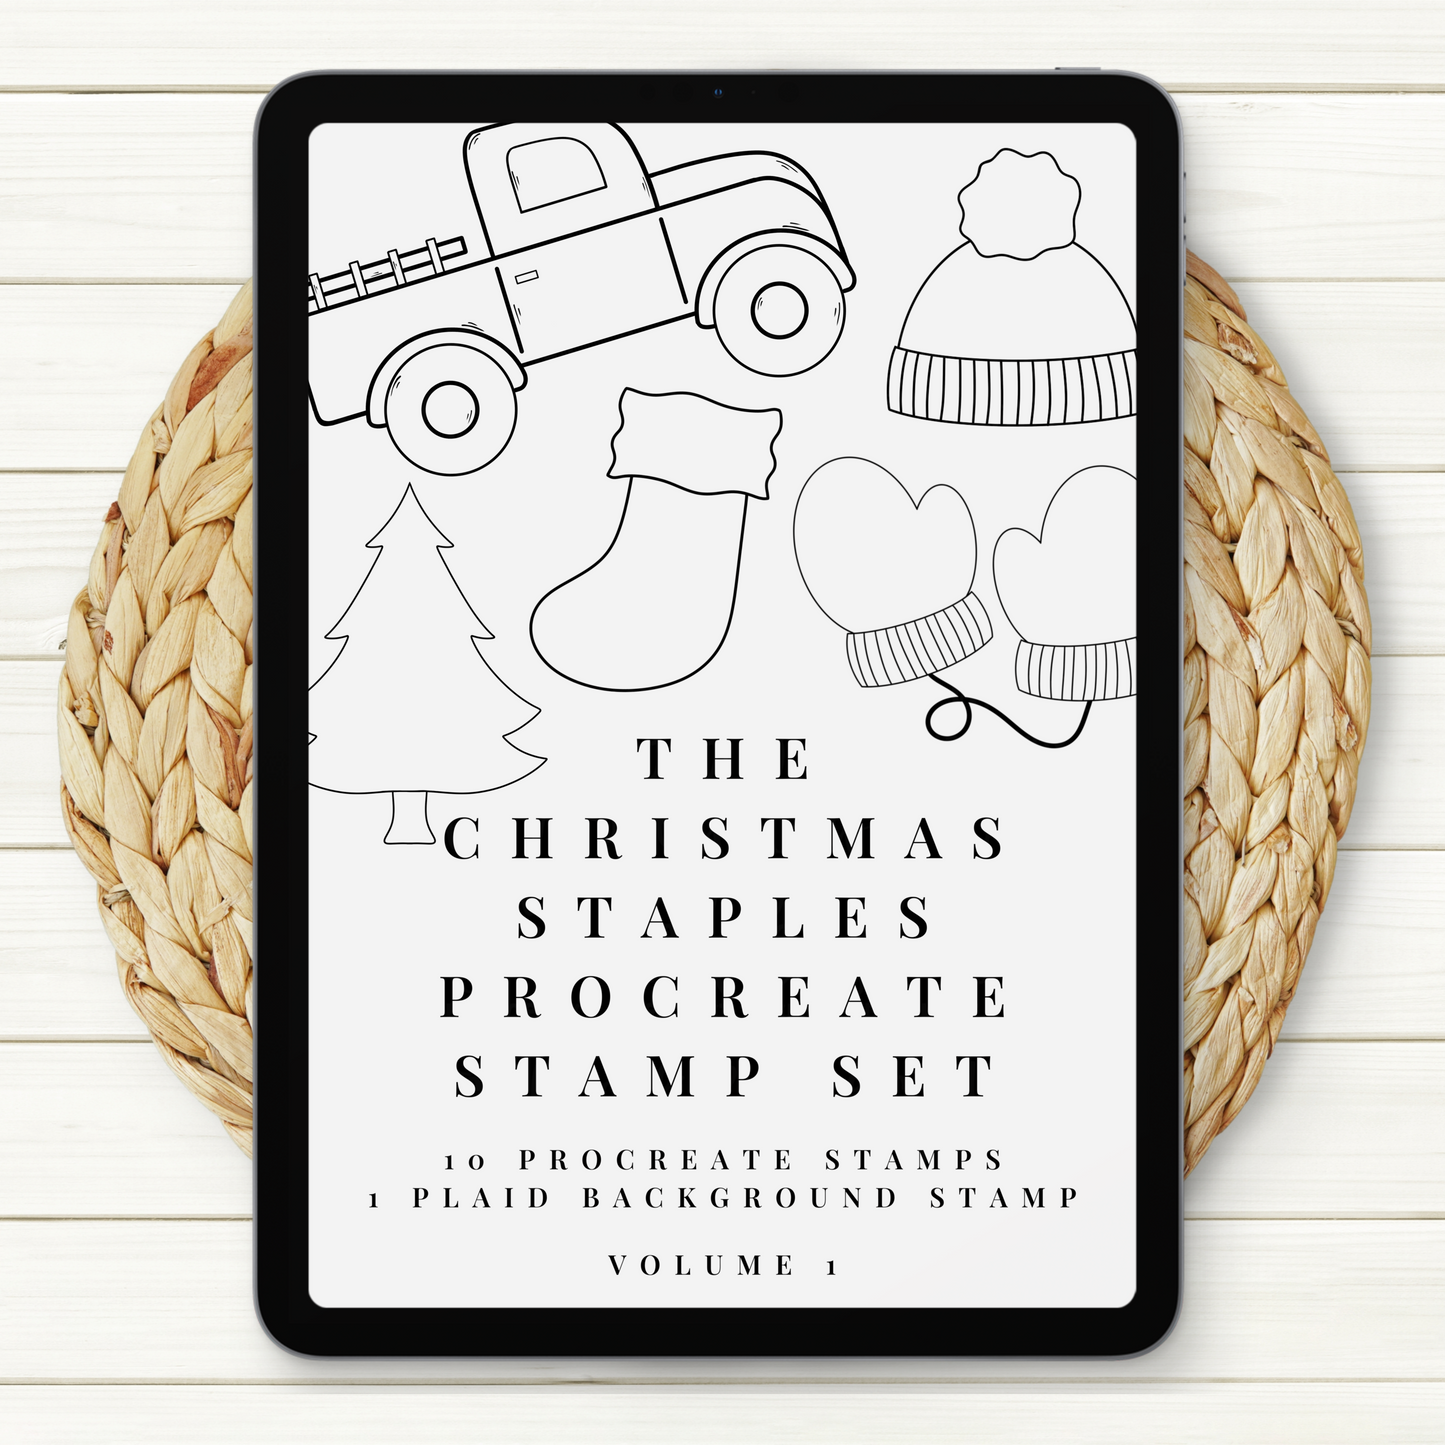 The Christmas Staples Procreate Stamp Set Volume 1